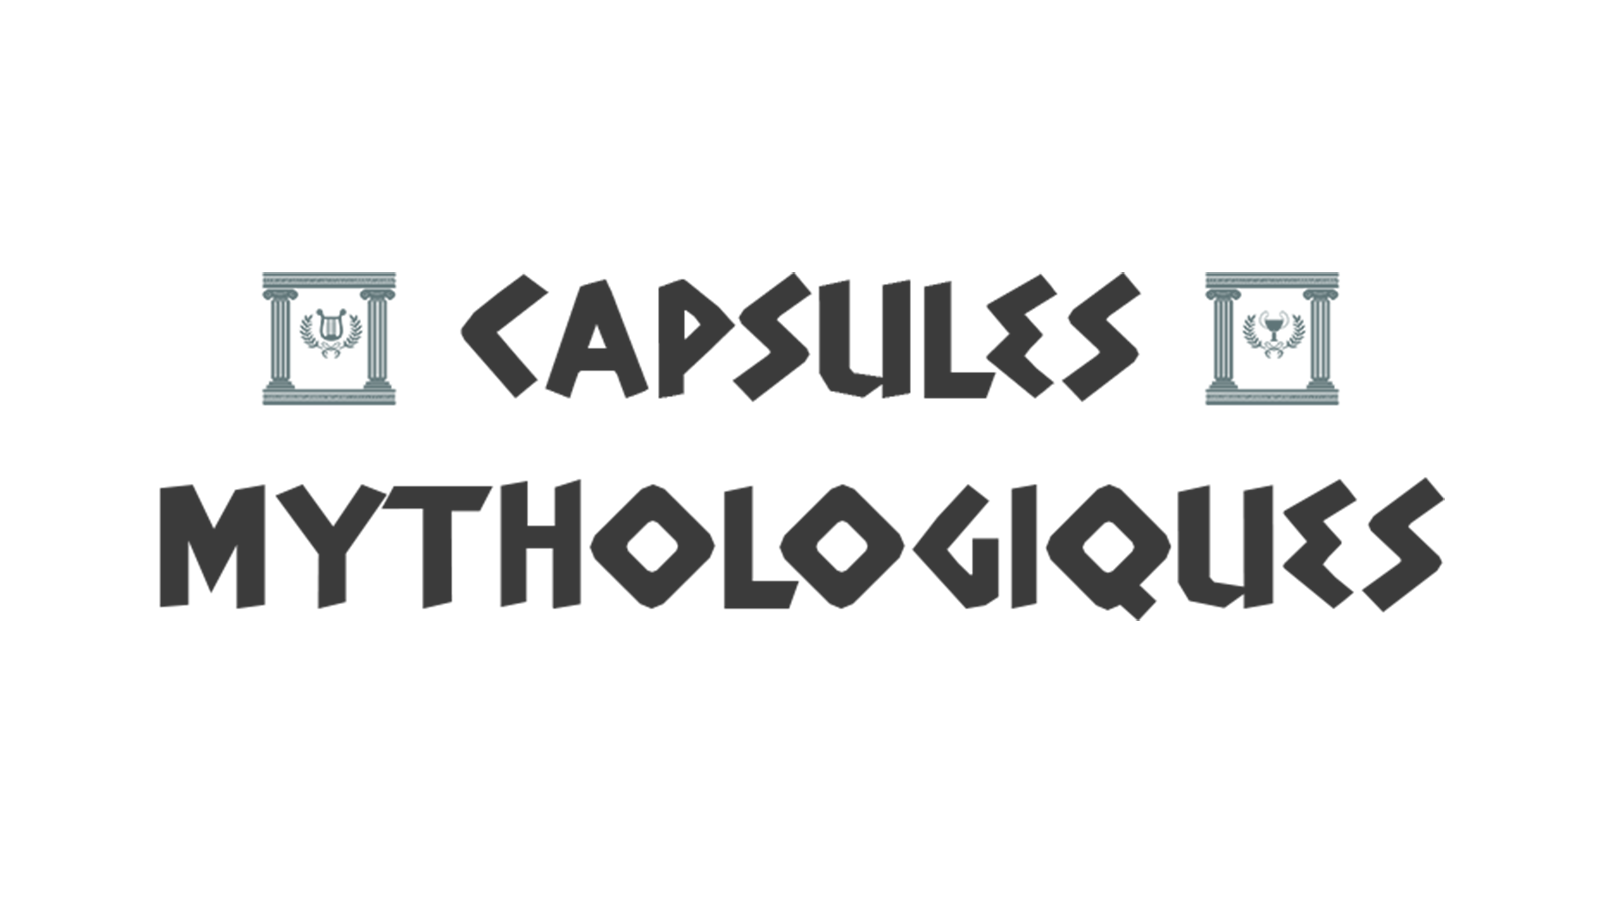 Capsules mythologiques